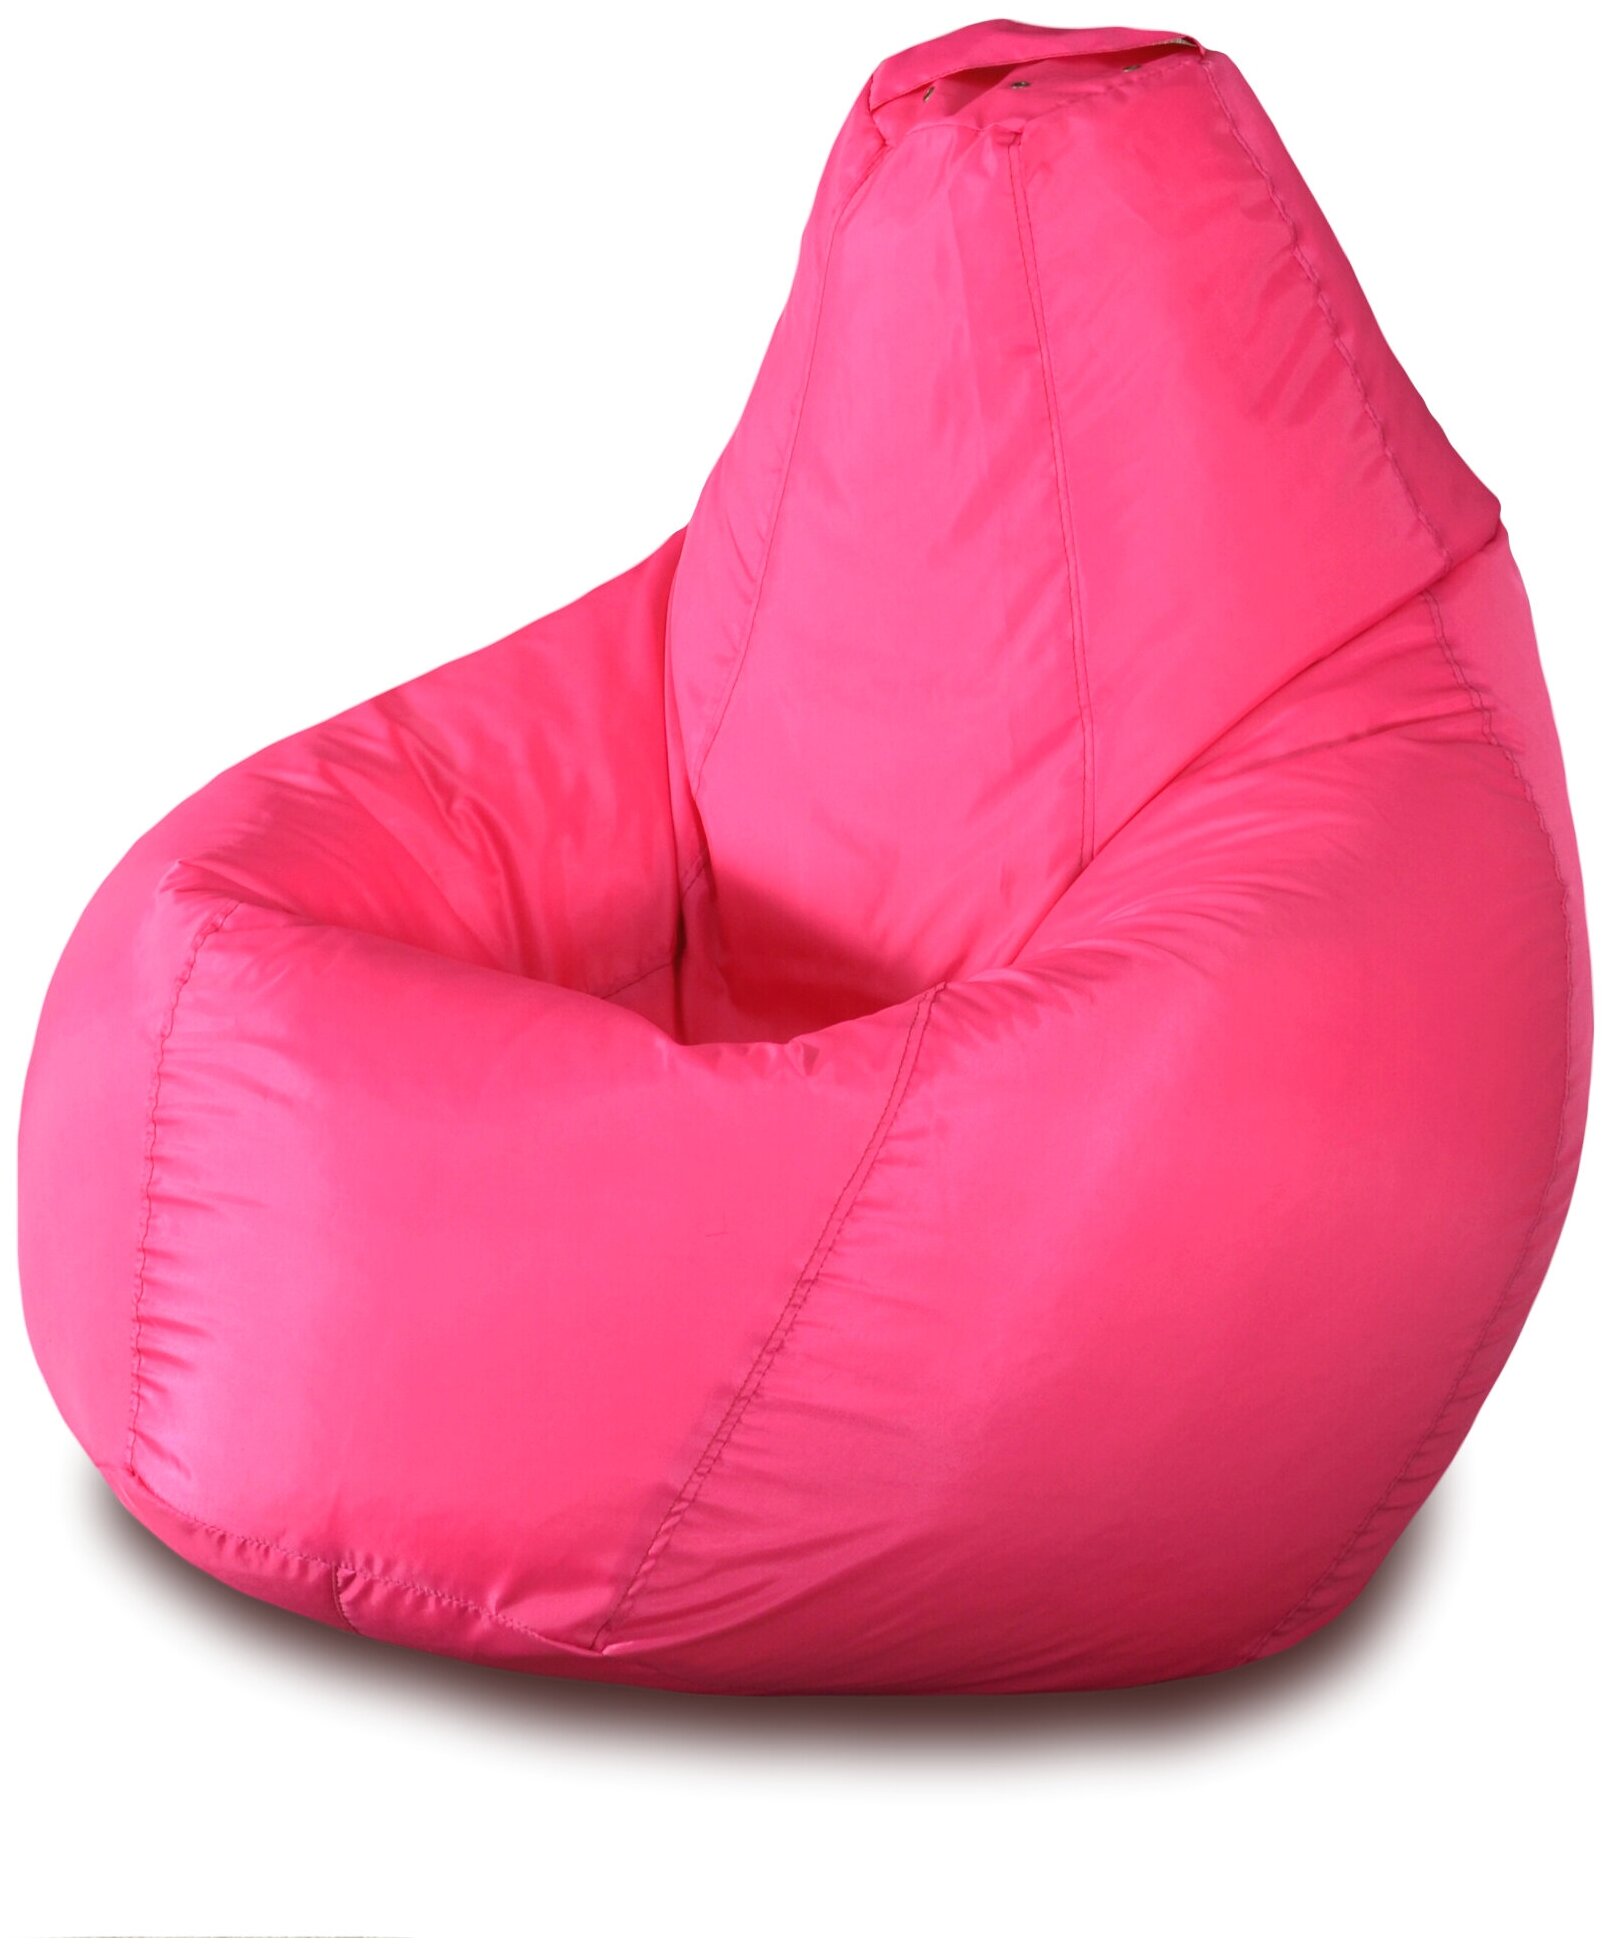 Кресло-мешок Груша Пазитифчик розовая (оксфорд) 160х100 см